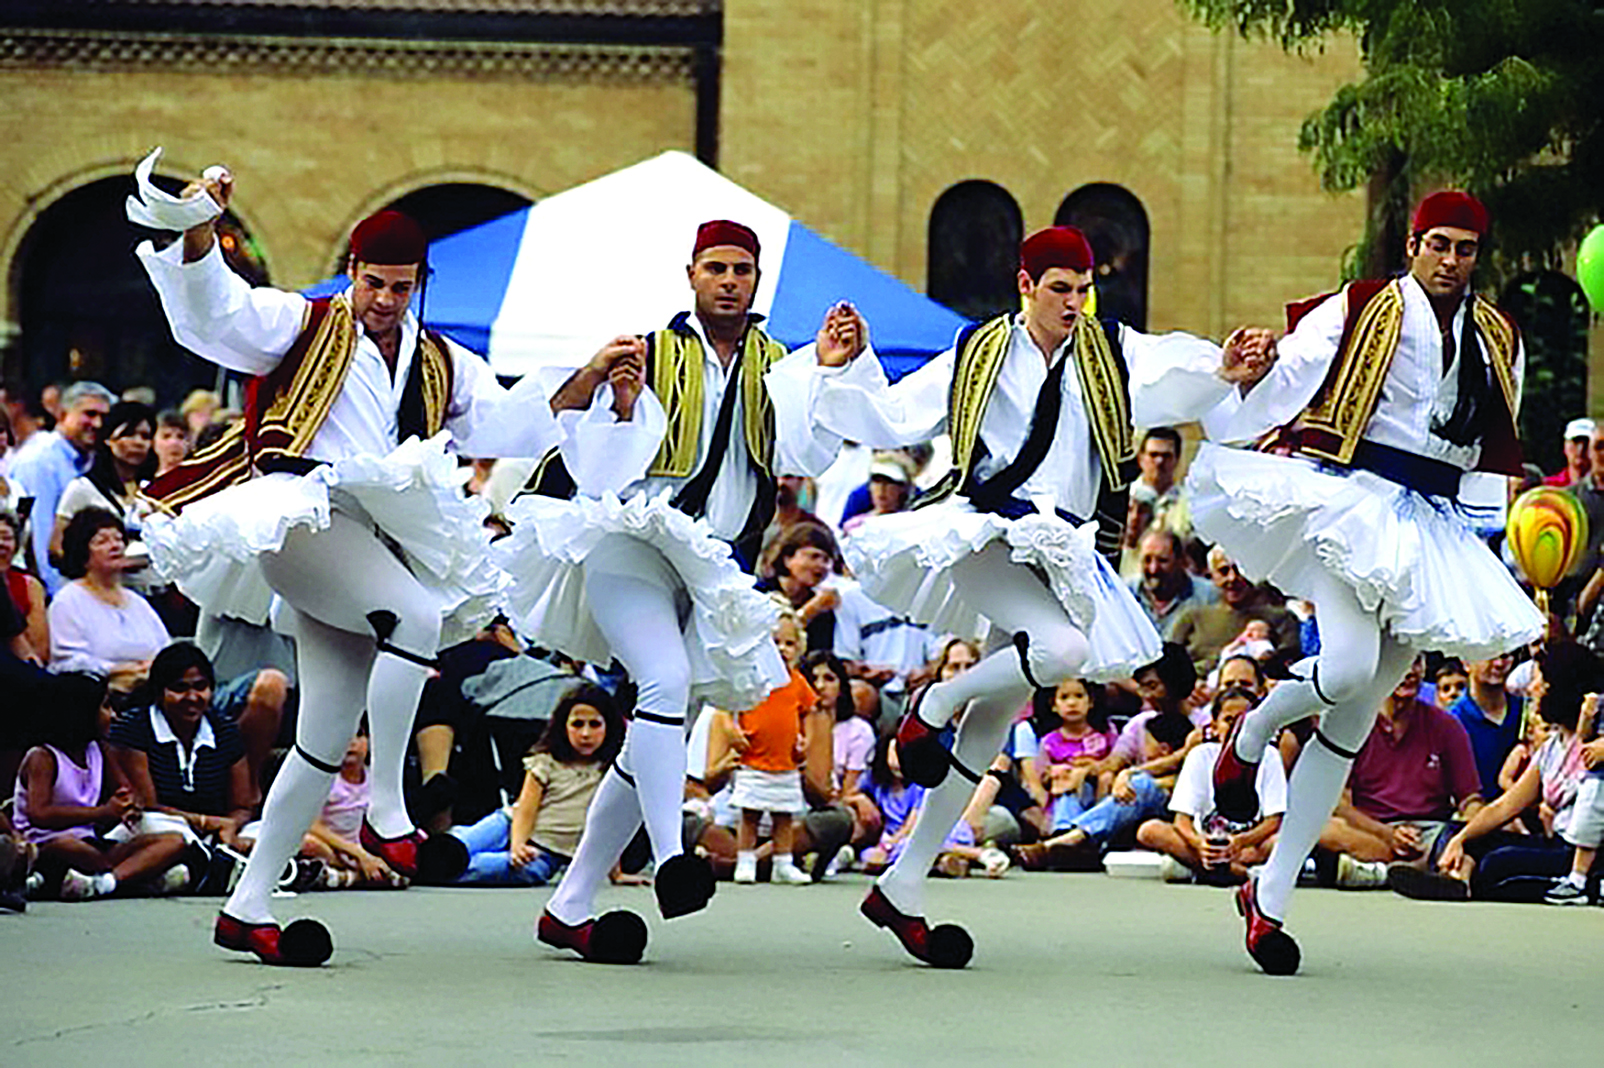 27th Annual Marietta Greek Festival